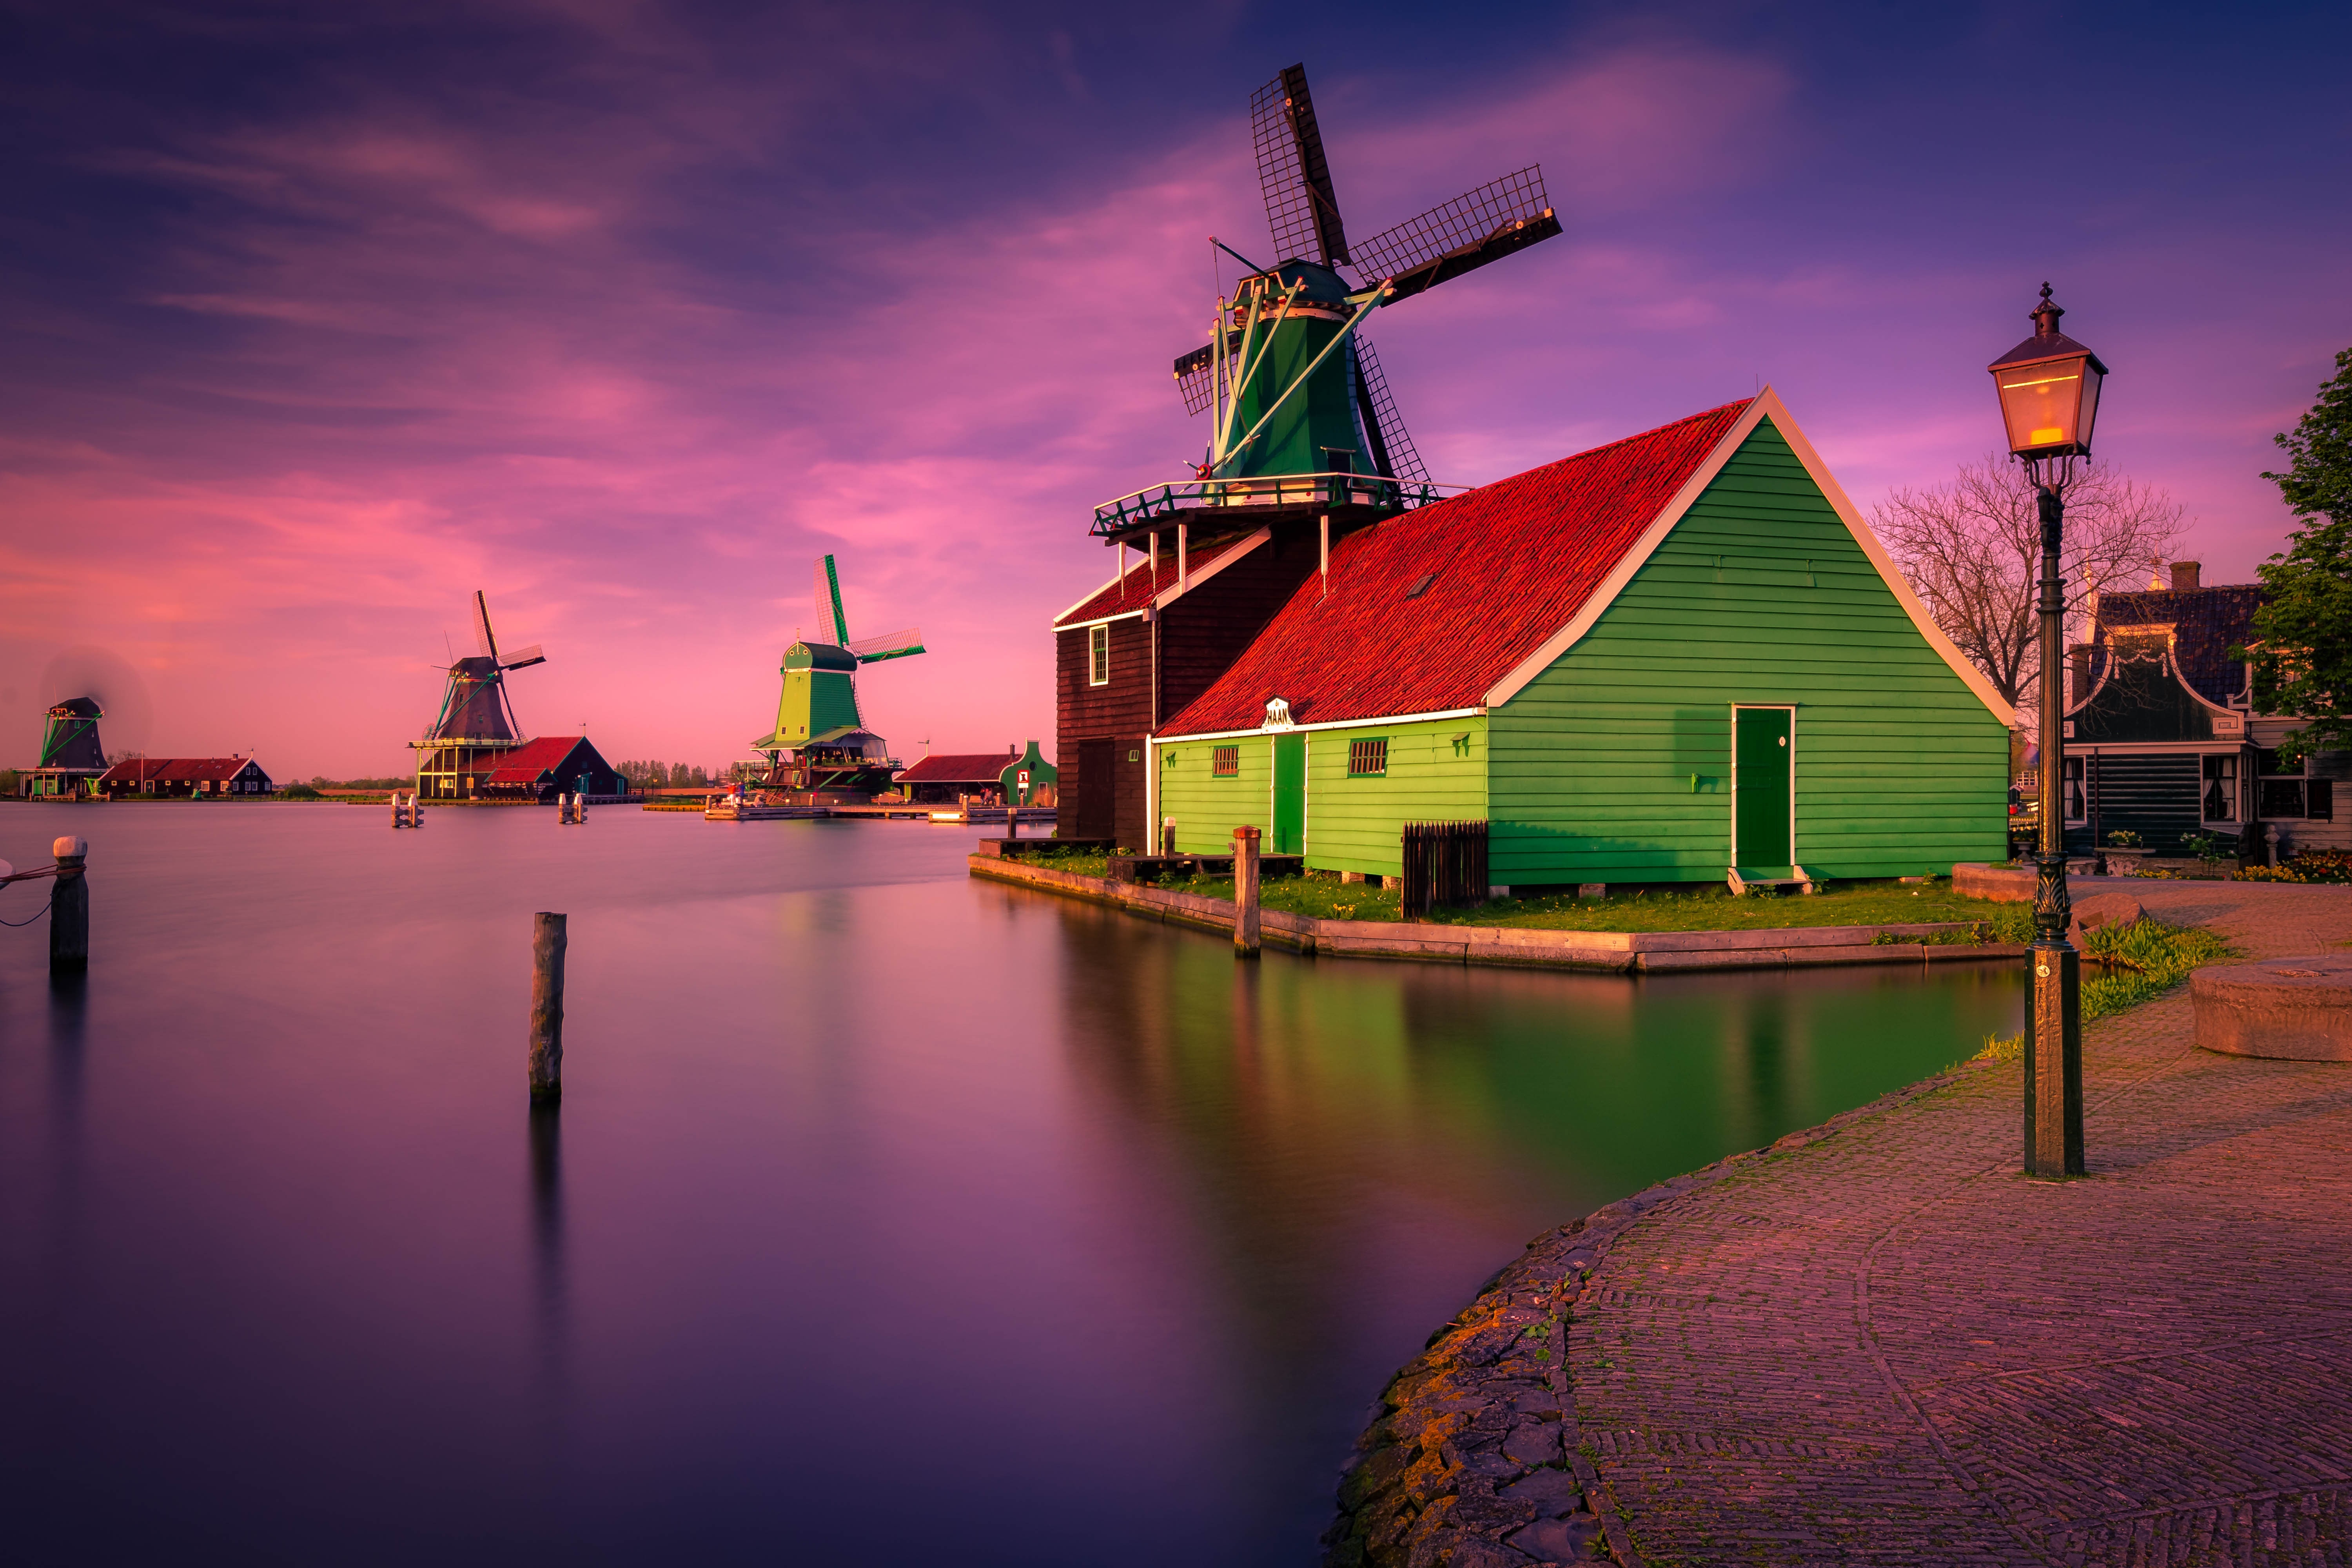  Colorful  Village  Home Netherlands Wallpaper HD City 4K 